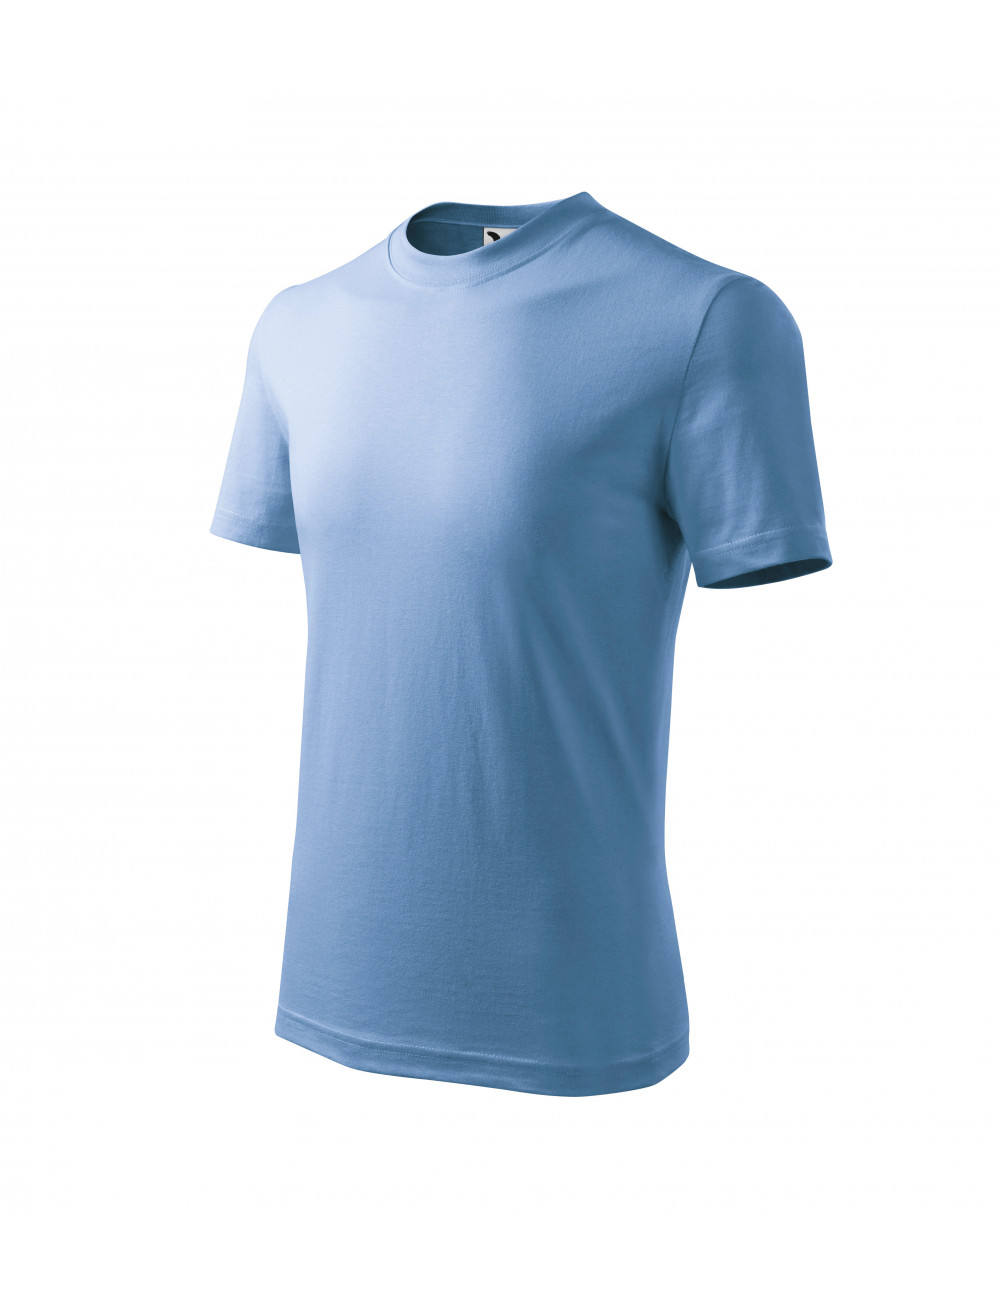 Koszulka dziecięca basic 138 błękitny Adler Malfini